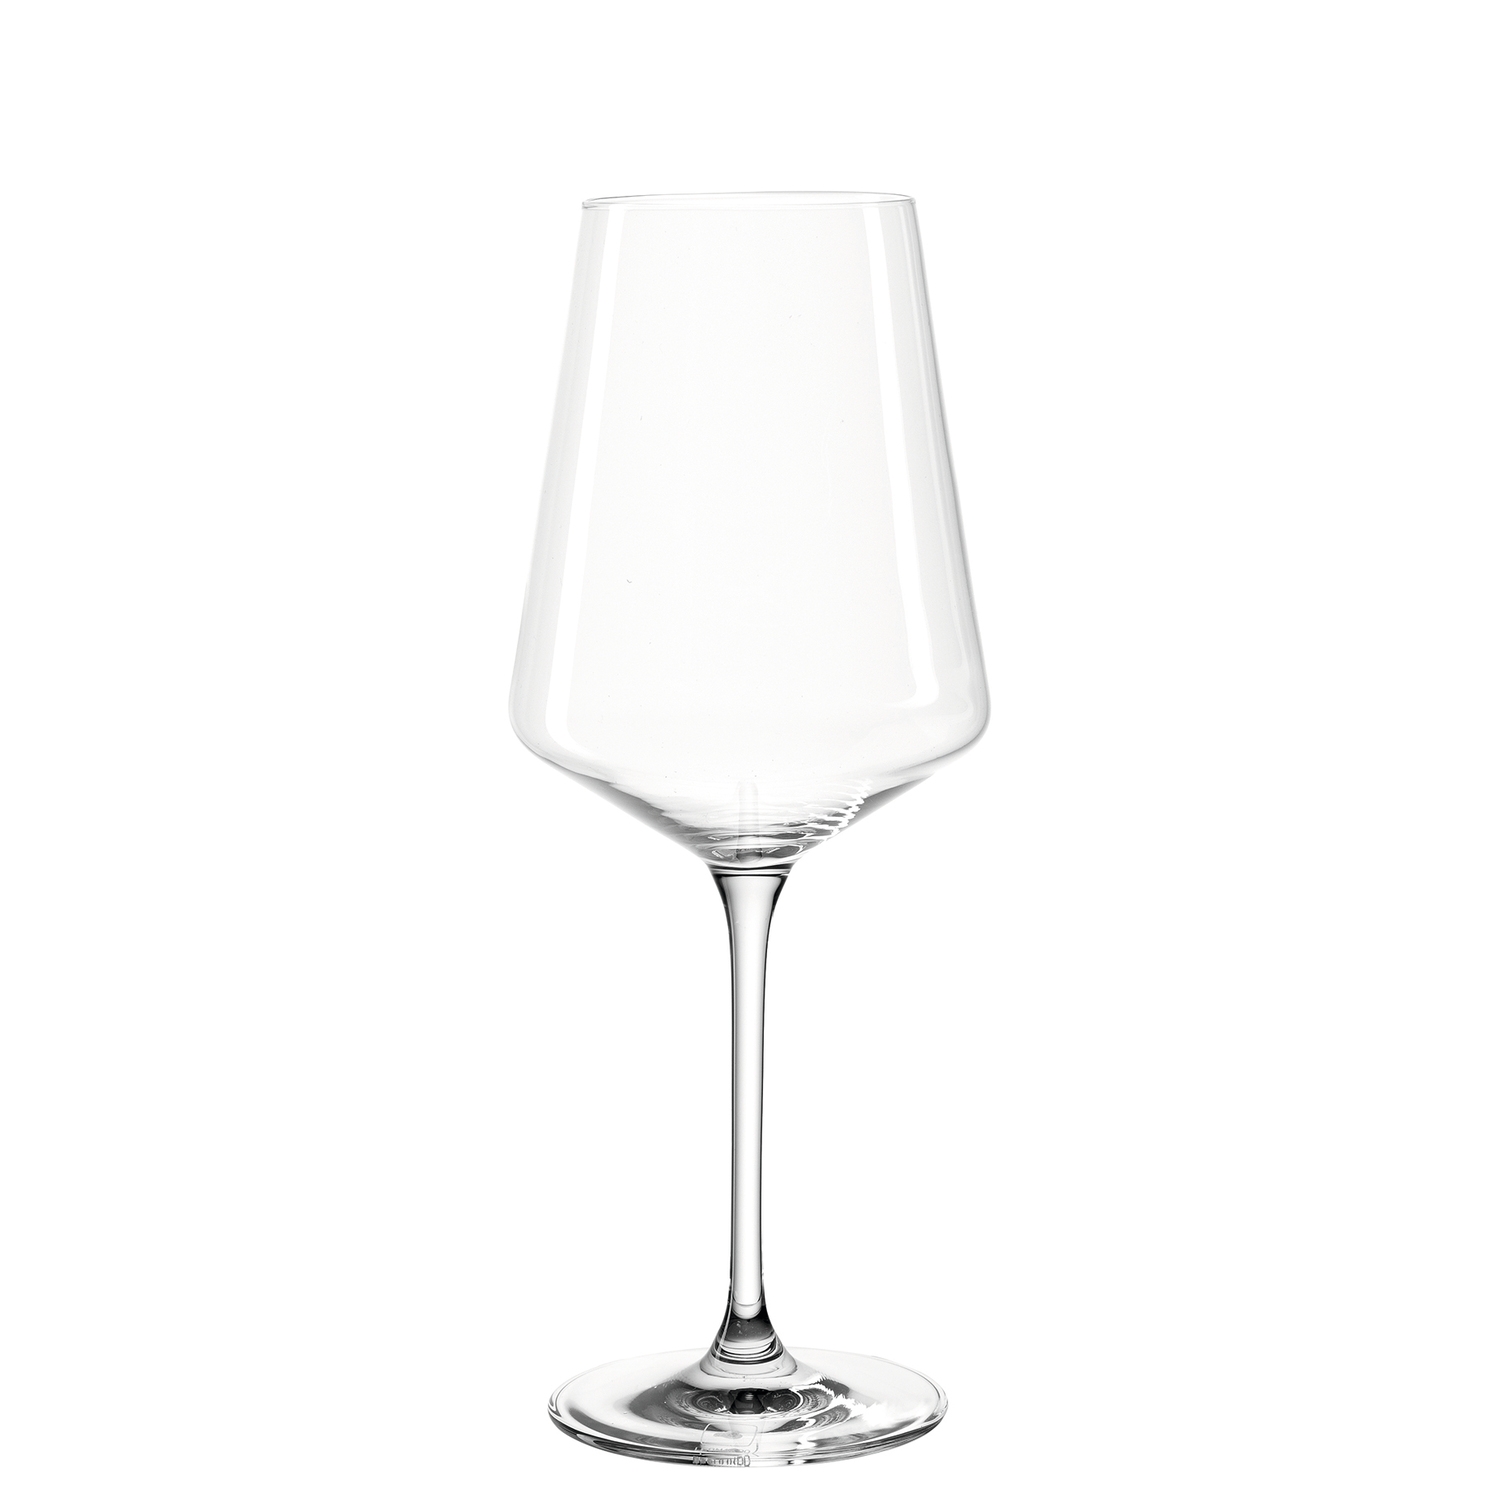  Weißweinglas   Puccini    Maße: 24 x 9,5 x 9,5 cm (HxBxT) 